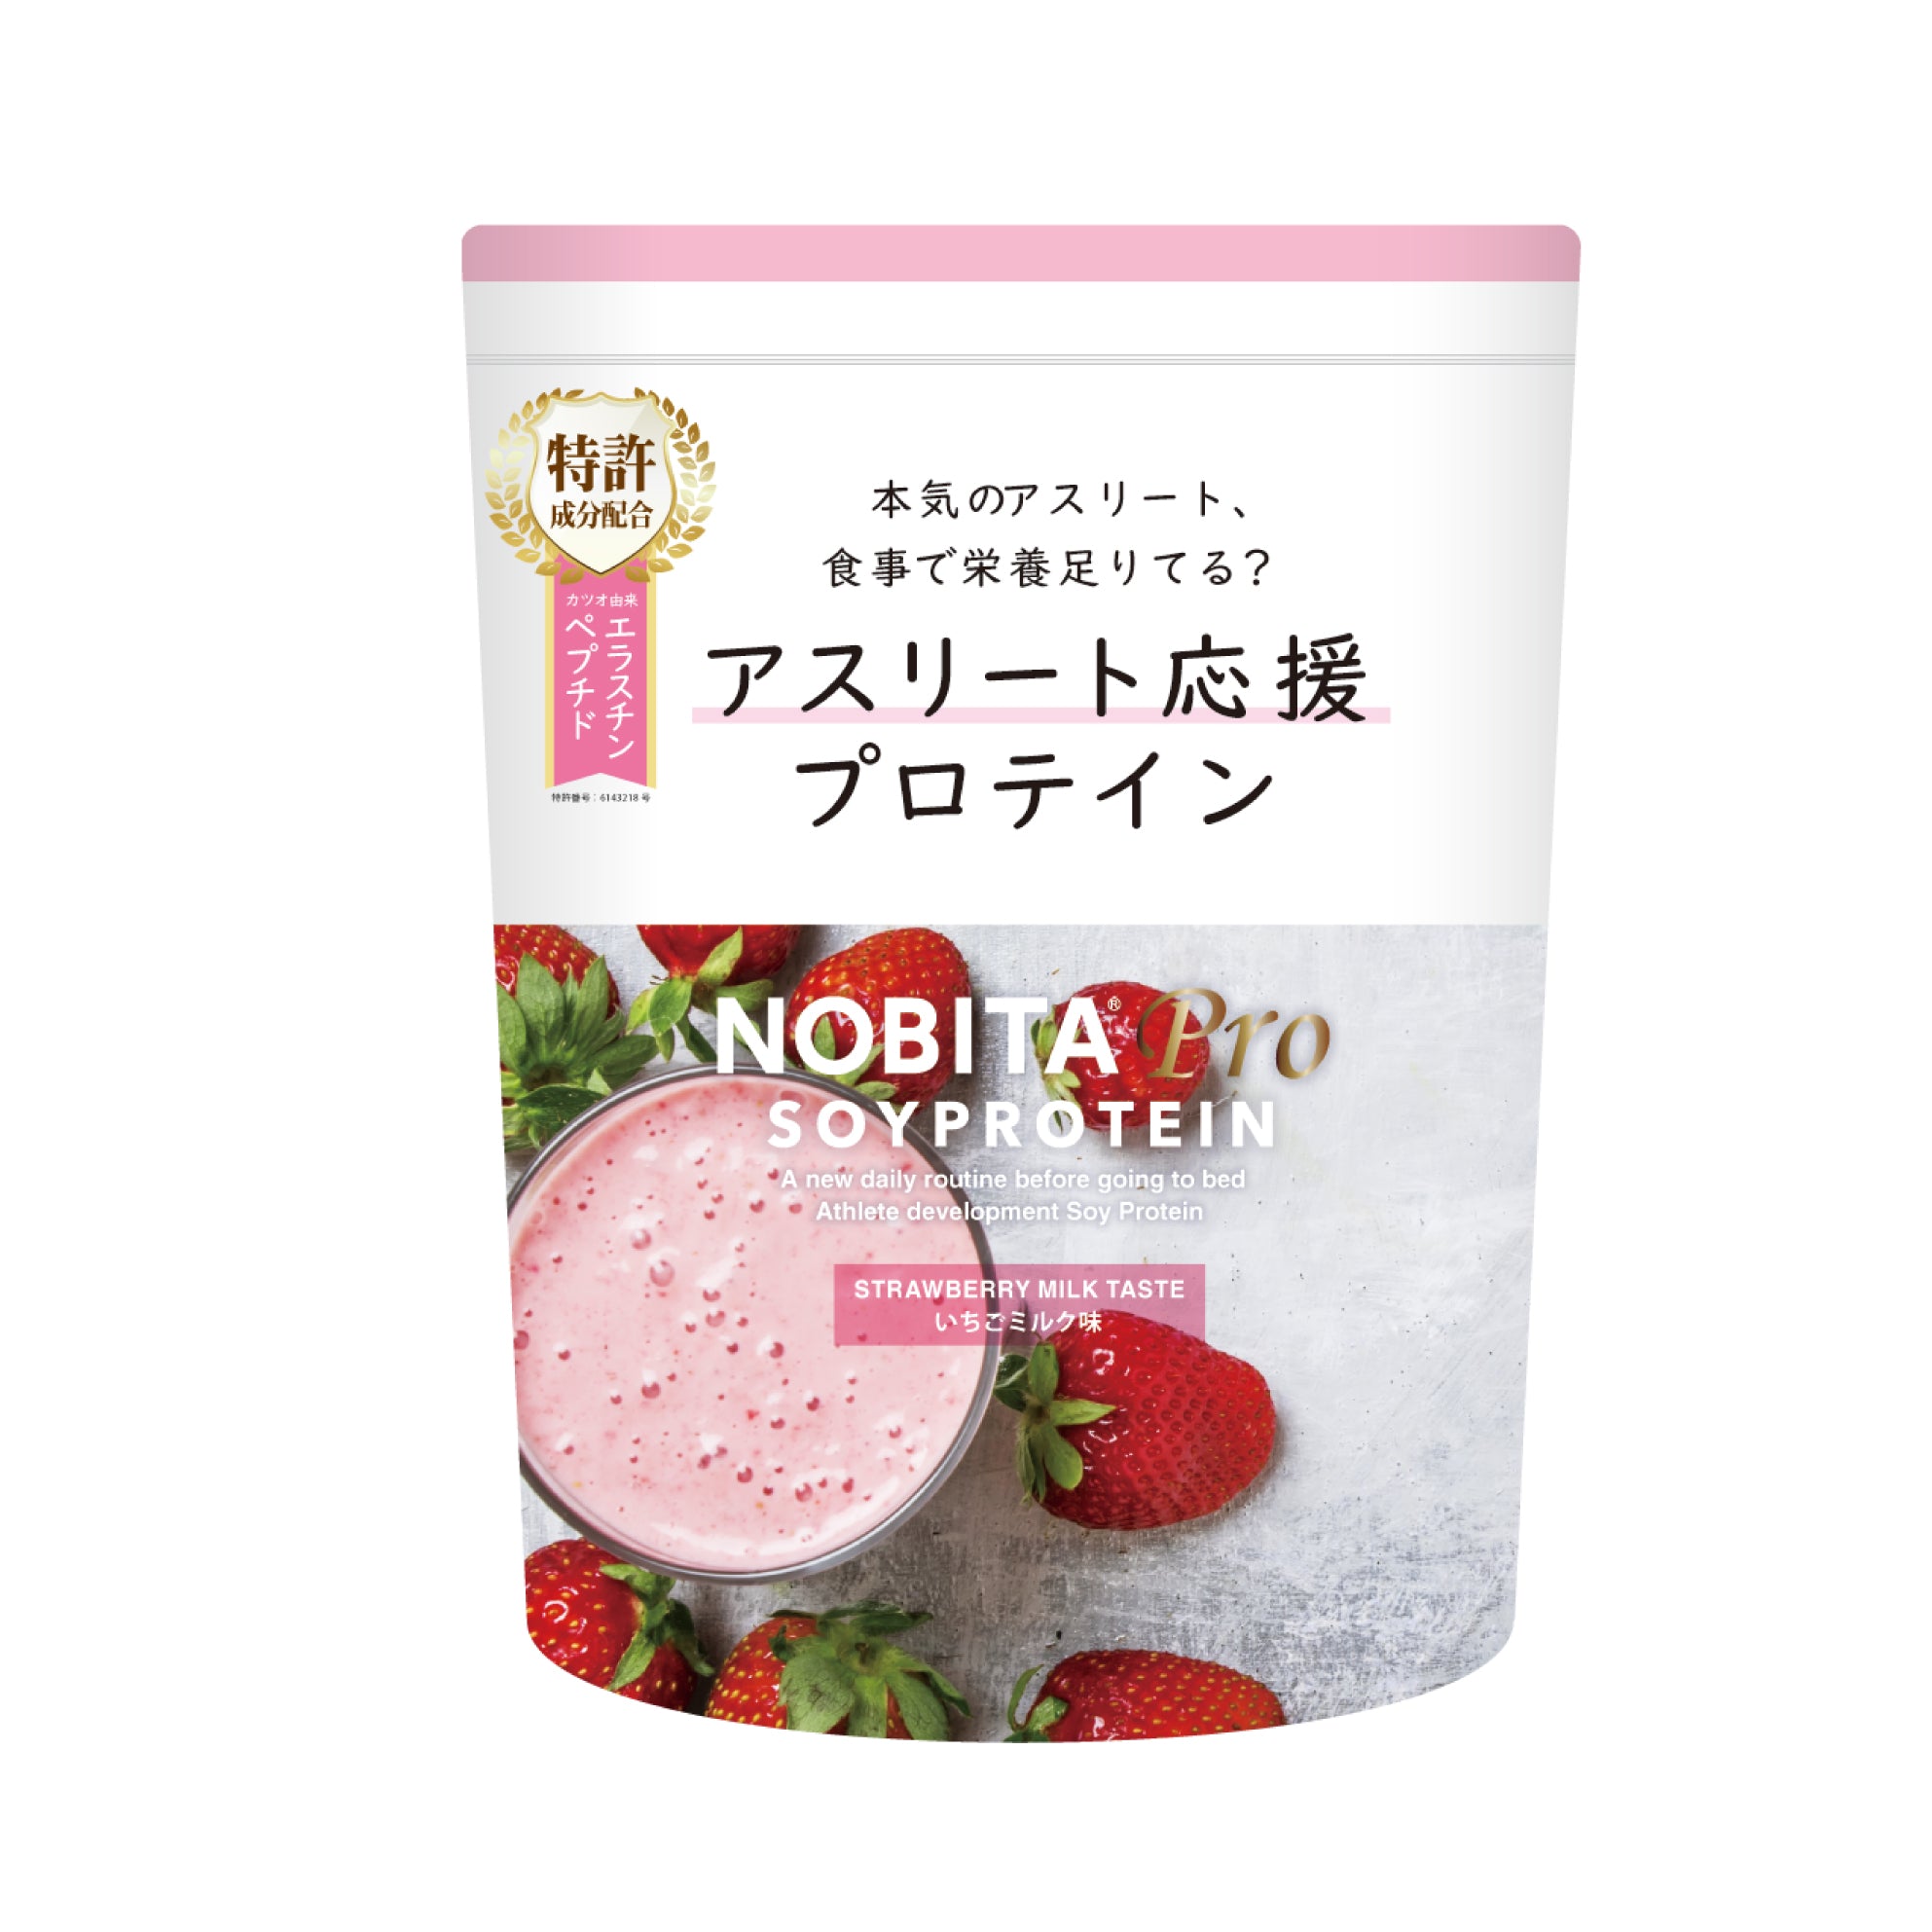 NOBITA-Proソイプロテイン - いちごミルク味 750g – NOBITA-SoyProtein